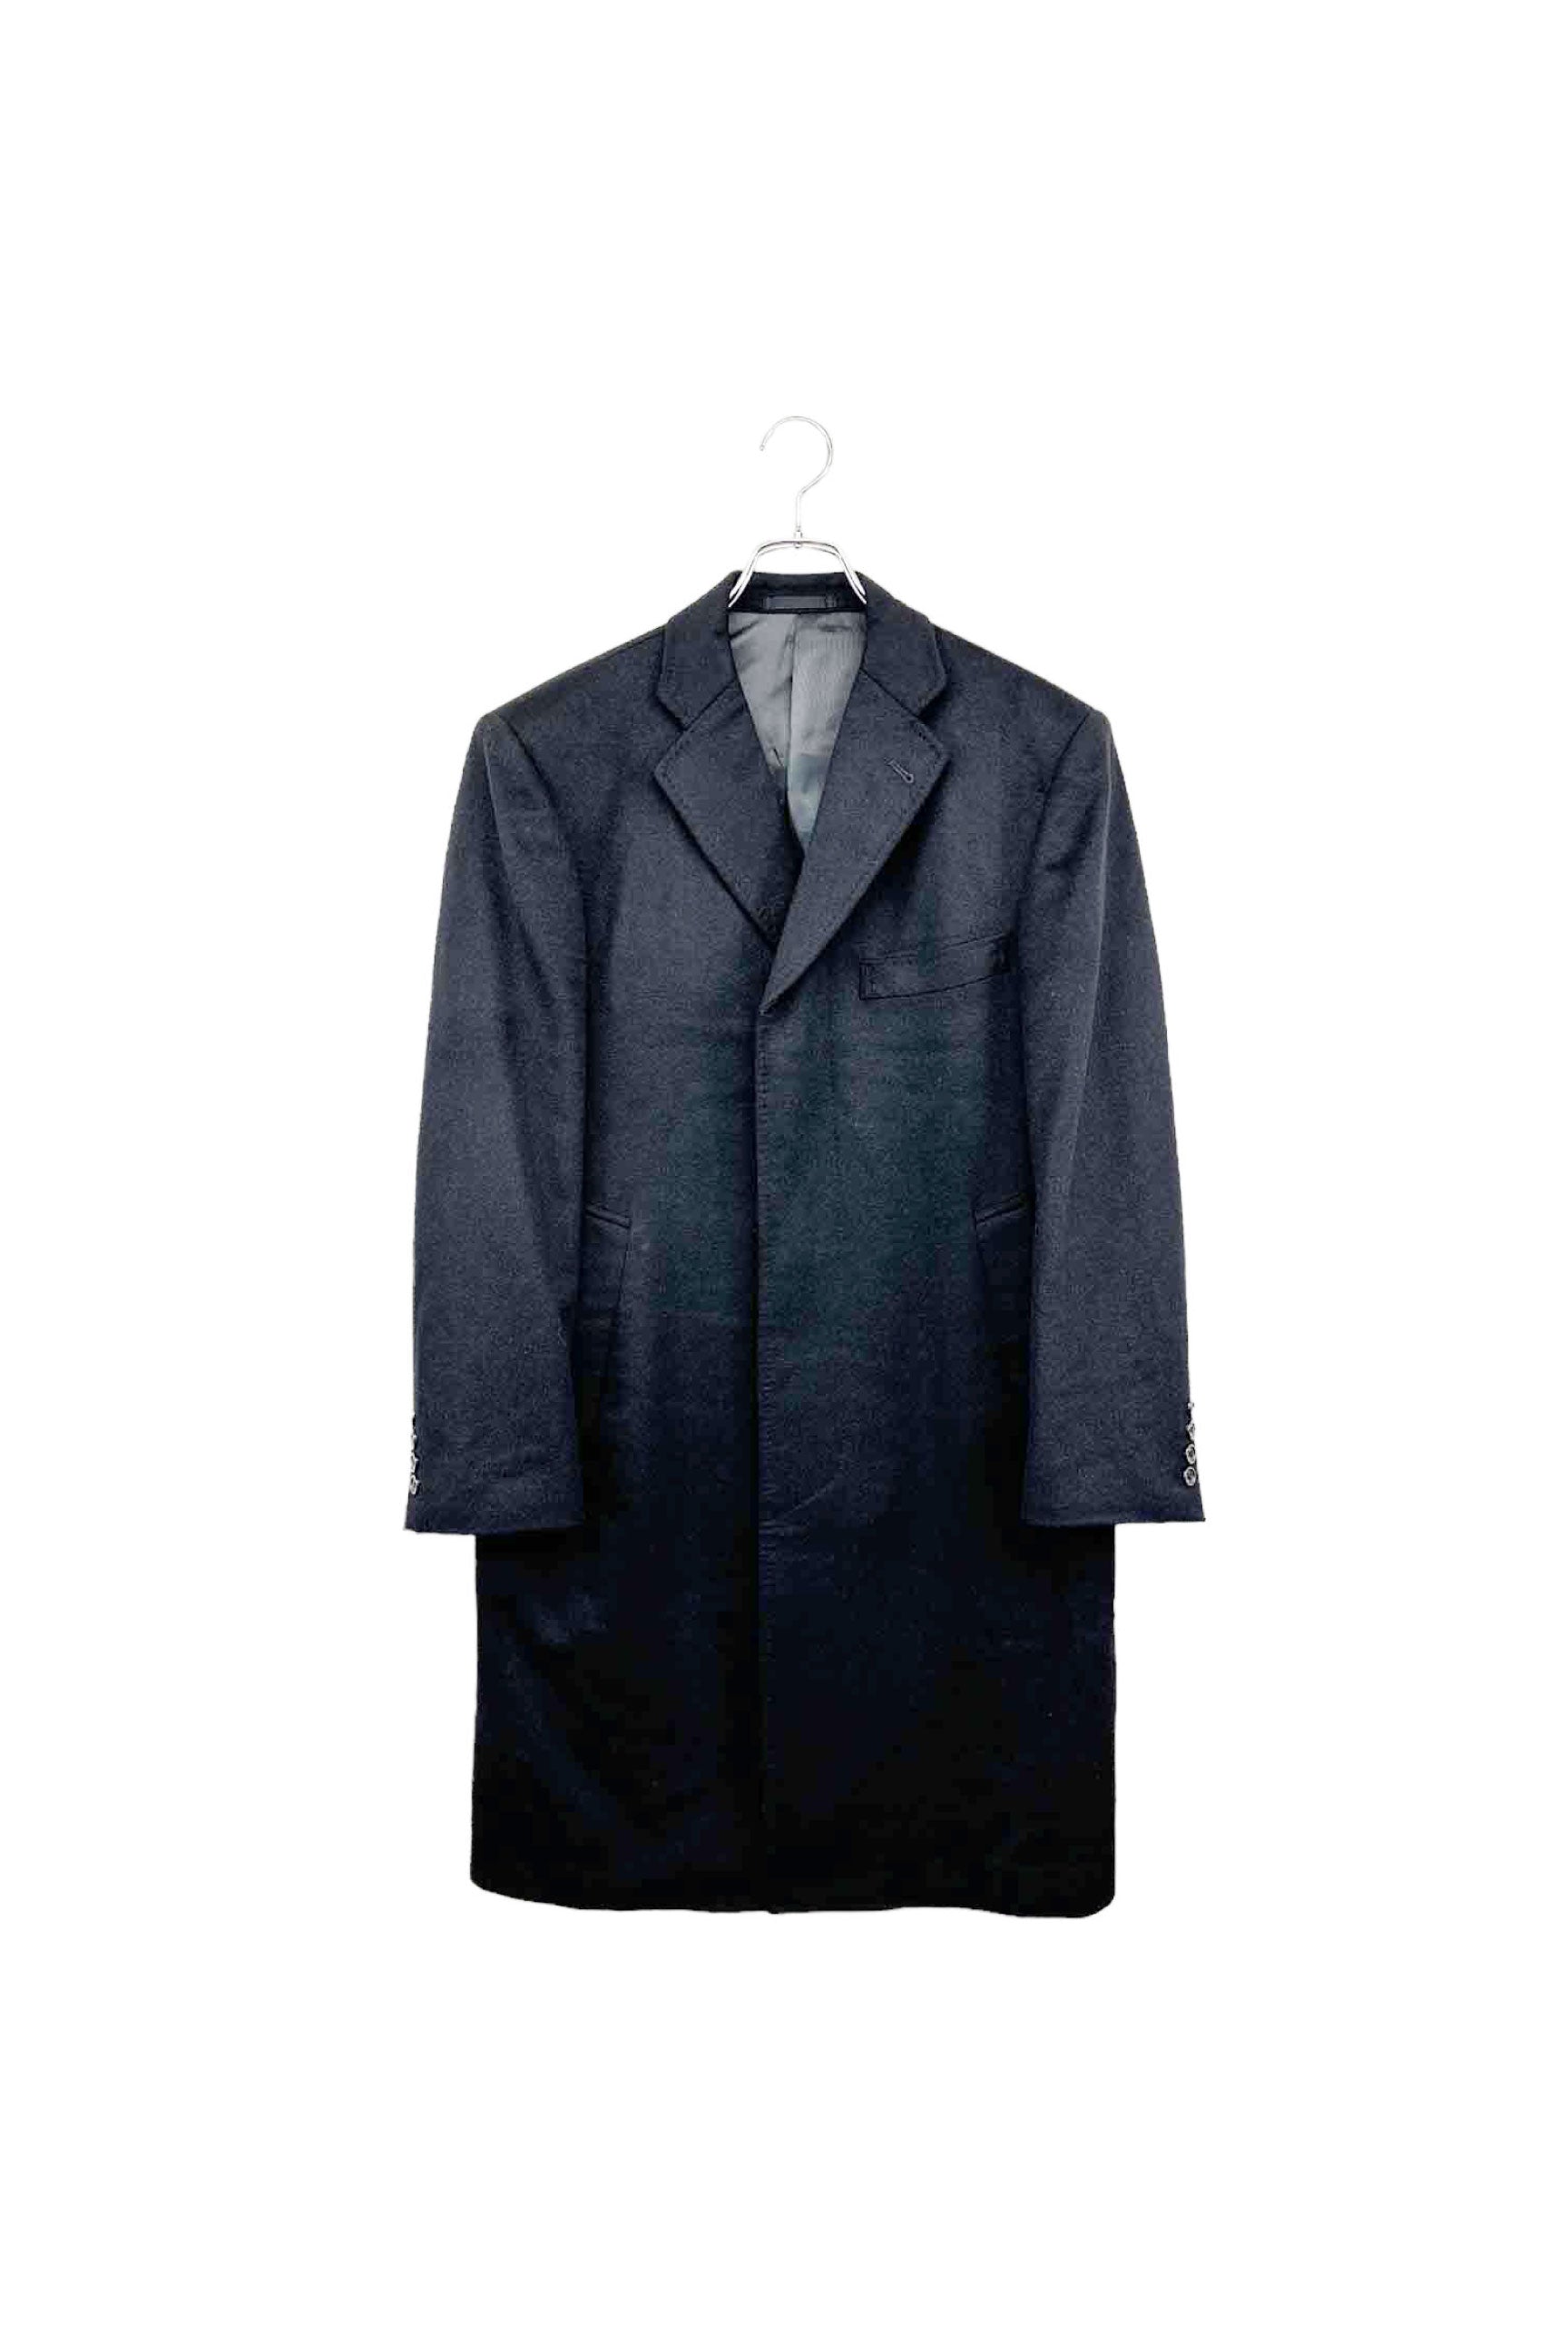 Valentino Rudy cashmere coat – ReSCOUNT STORE